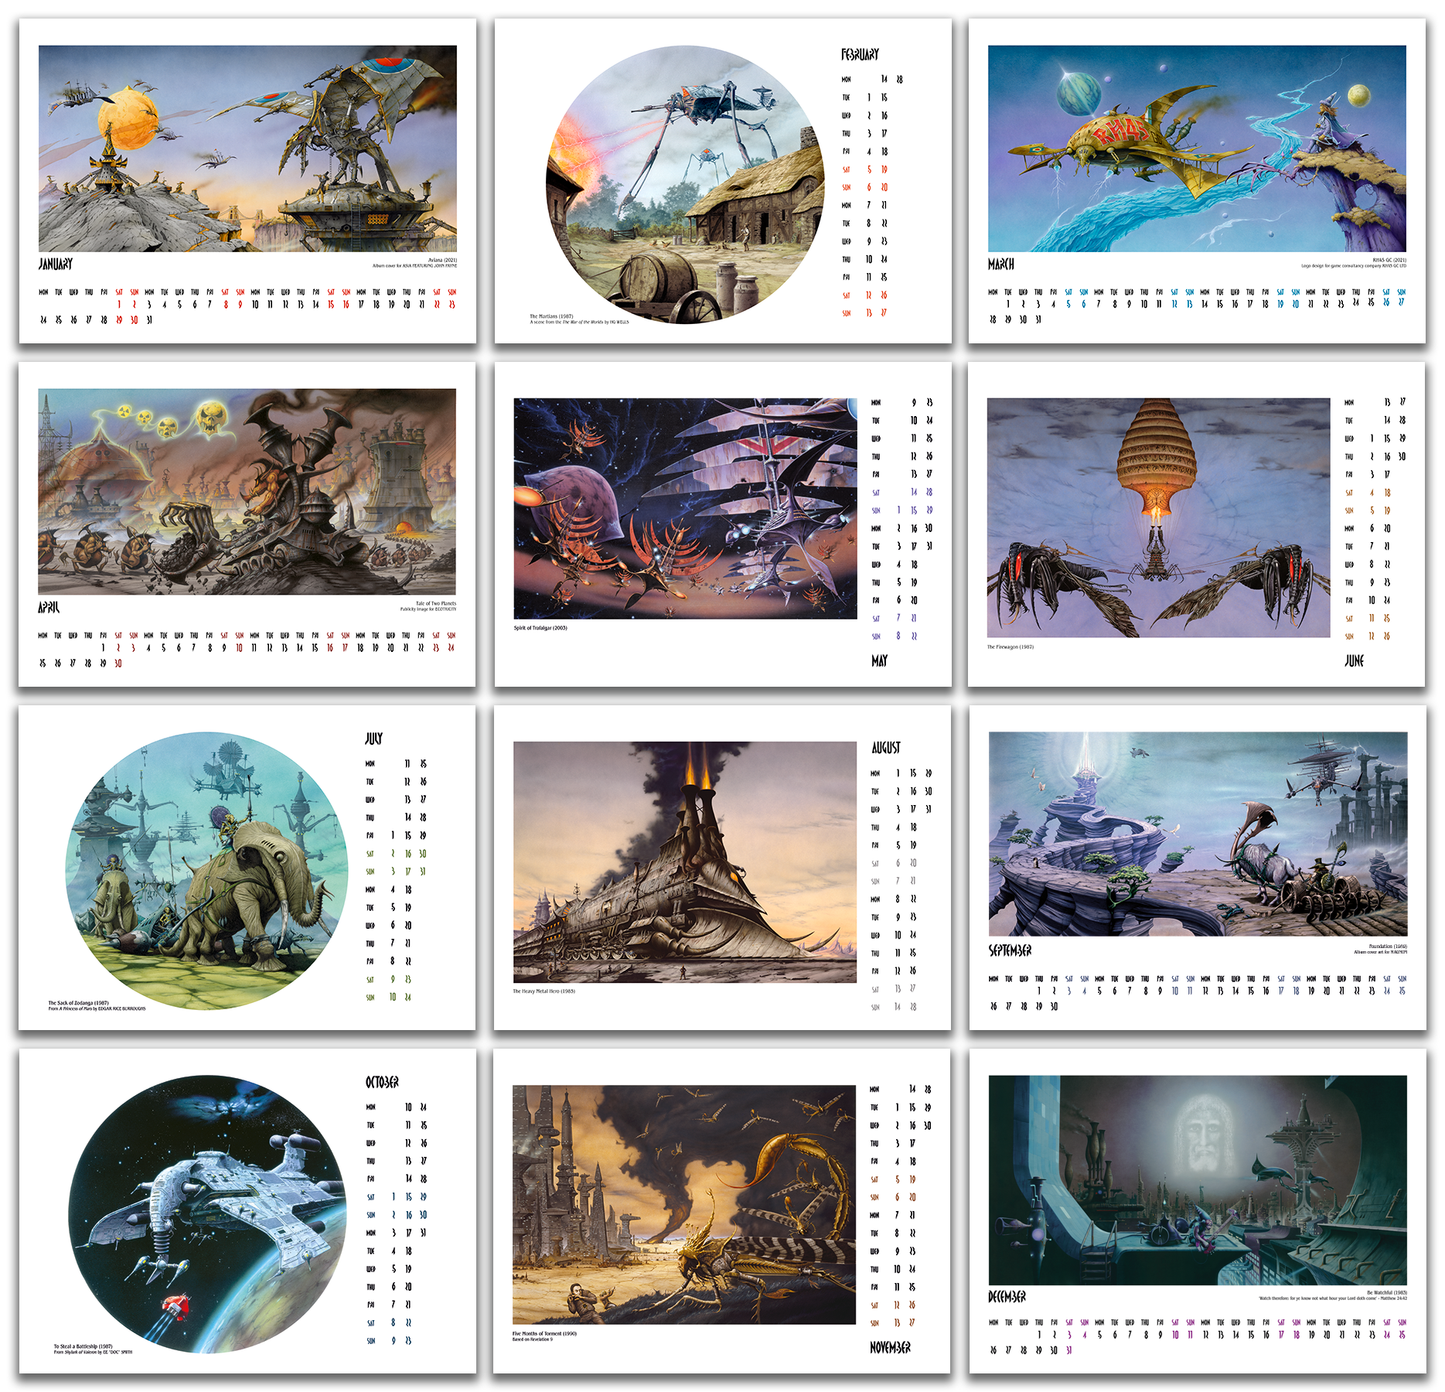 2022 Industria Calendar by Rodney Matthews - Inside Pages